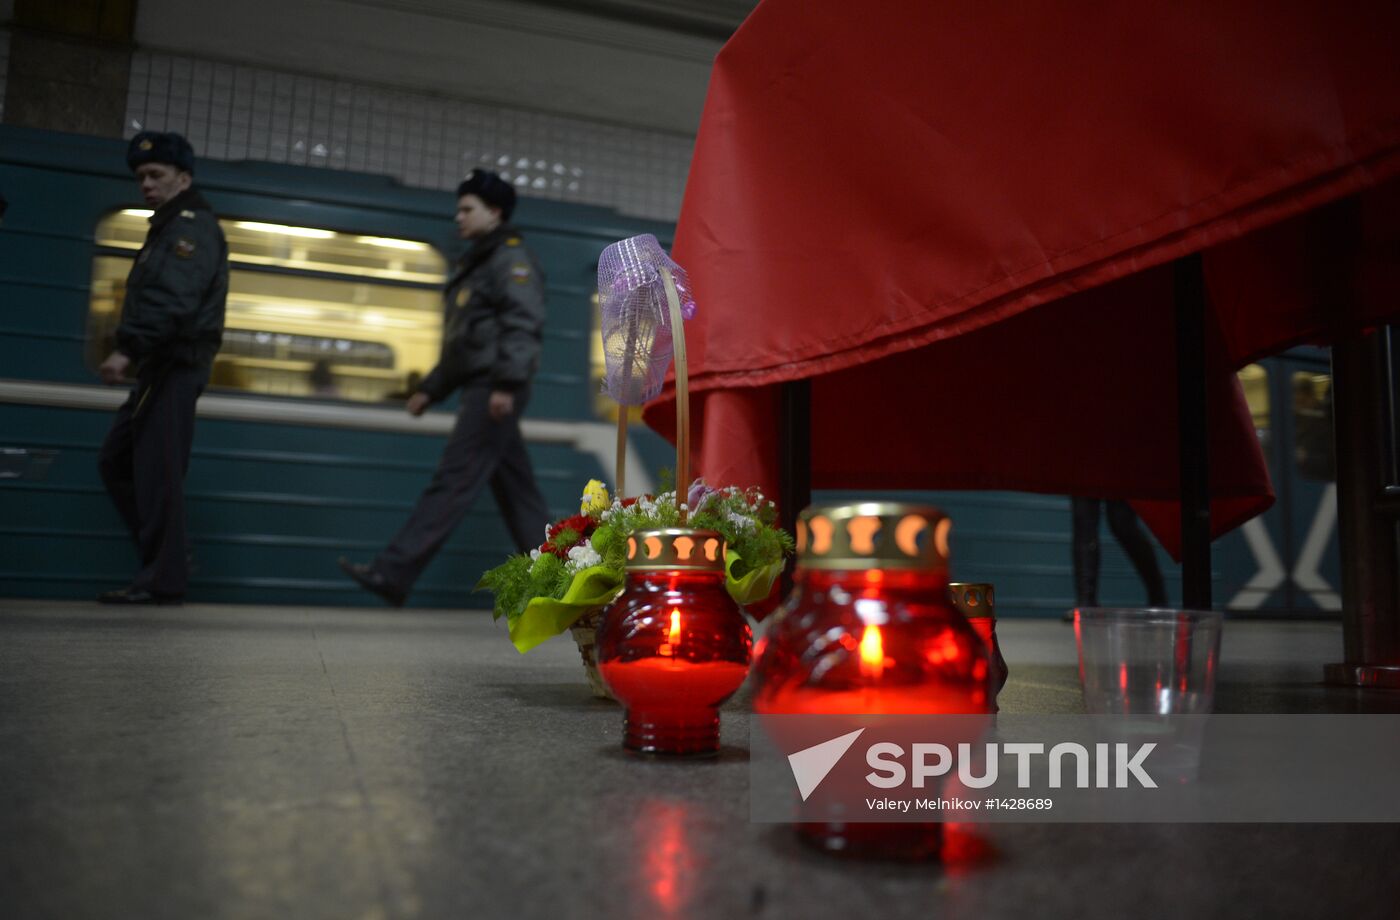 Three years since Park Kultury and Lubyanka bombing